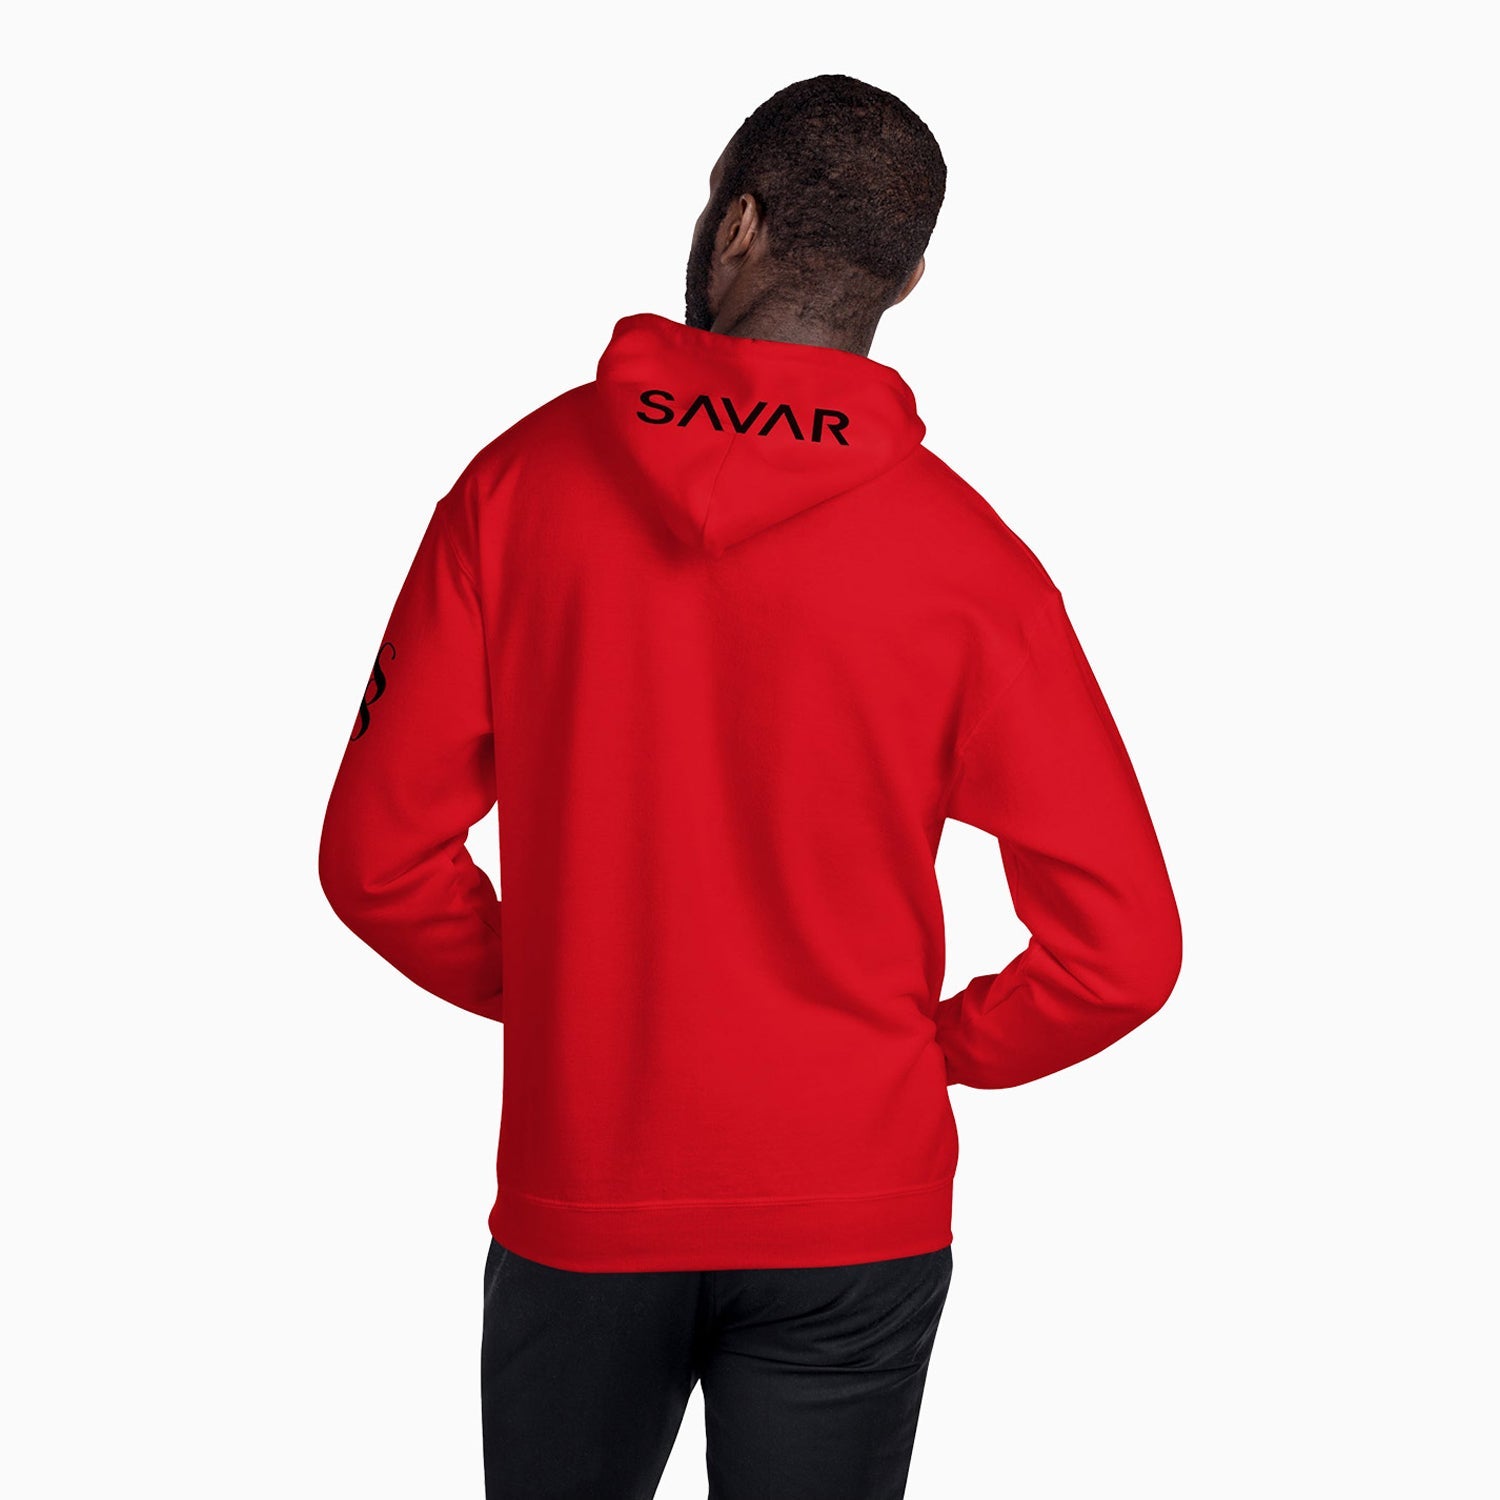 grenade-design-printed-pull-over-red-hoodie-for-men-sh102-657